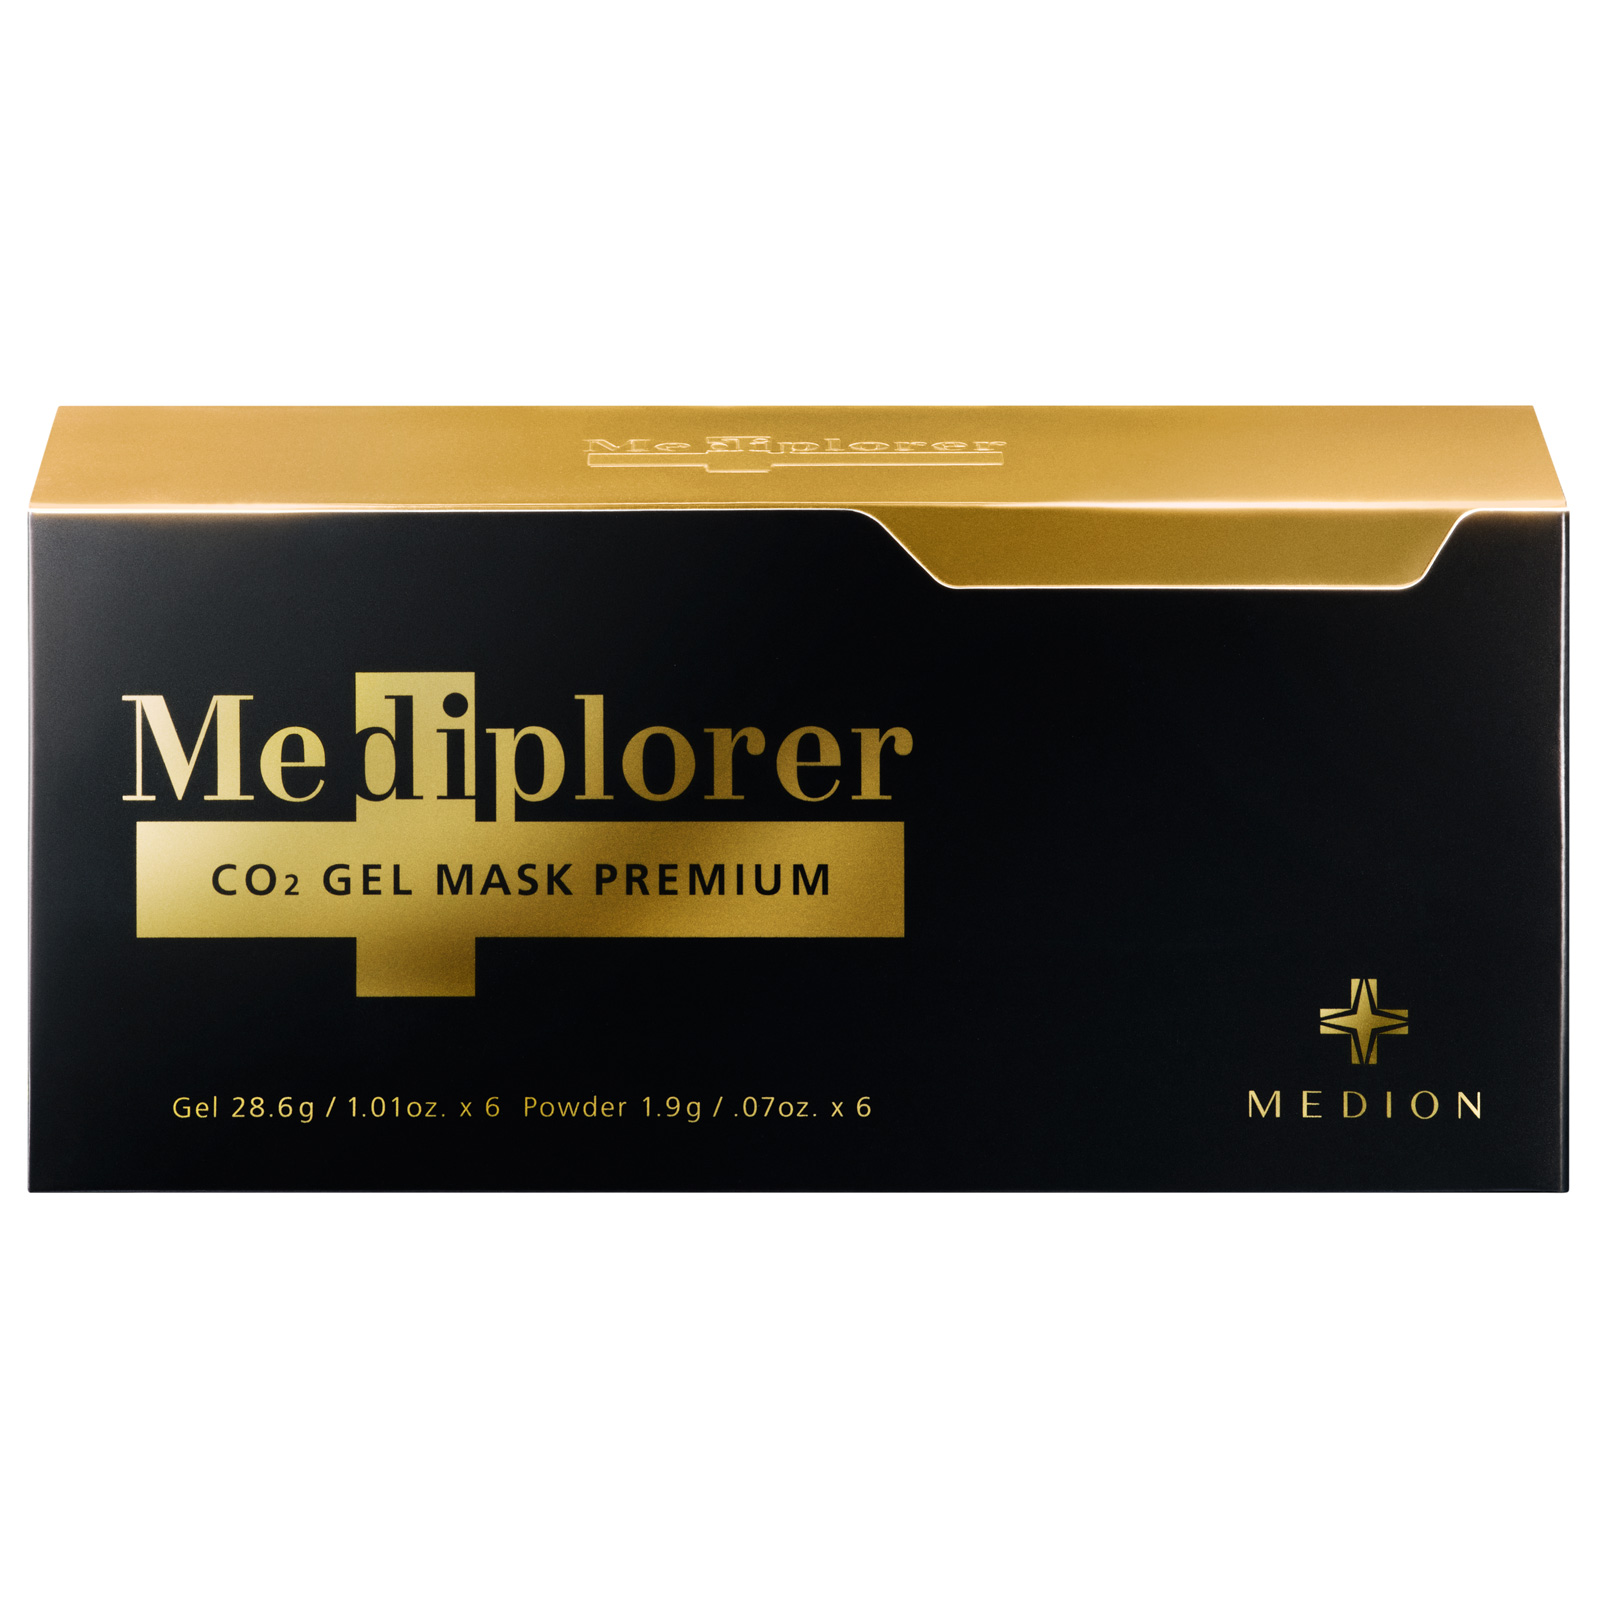 Mediplorer CO2 Gel Mask Premium. Премиальная гелевая маска СО2 для лица Медиплорер, гель 28 г х 6 шт., порошок 1.9 г х 6 шт.